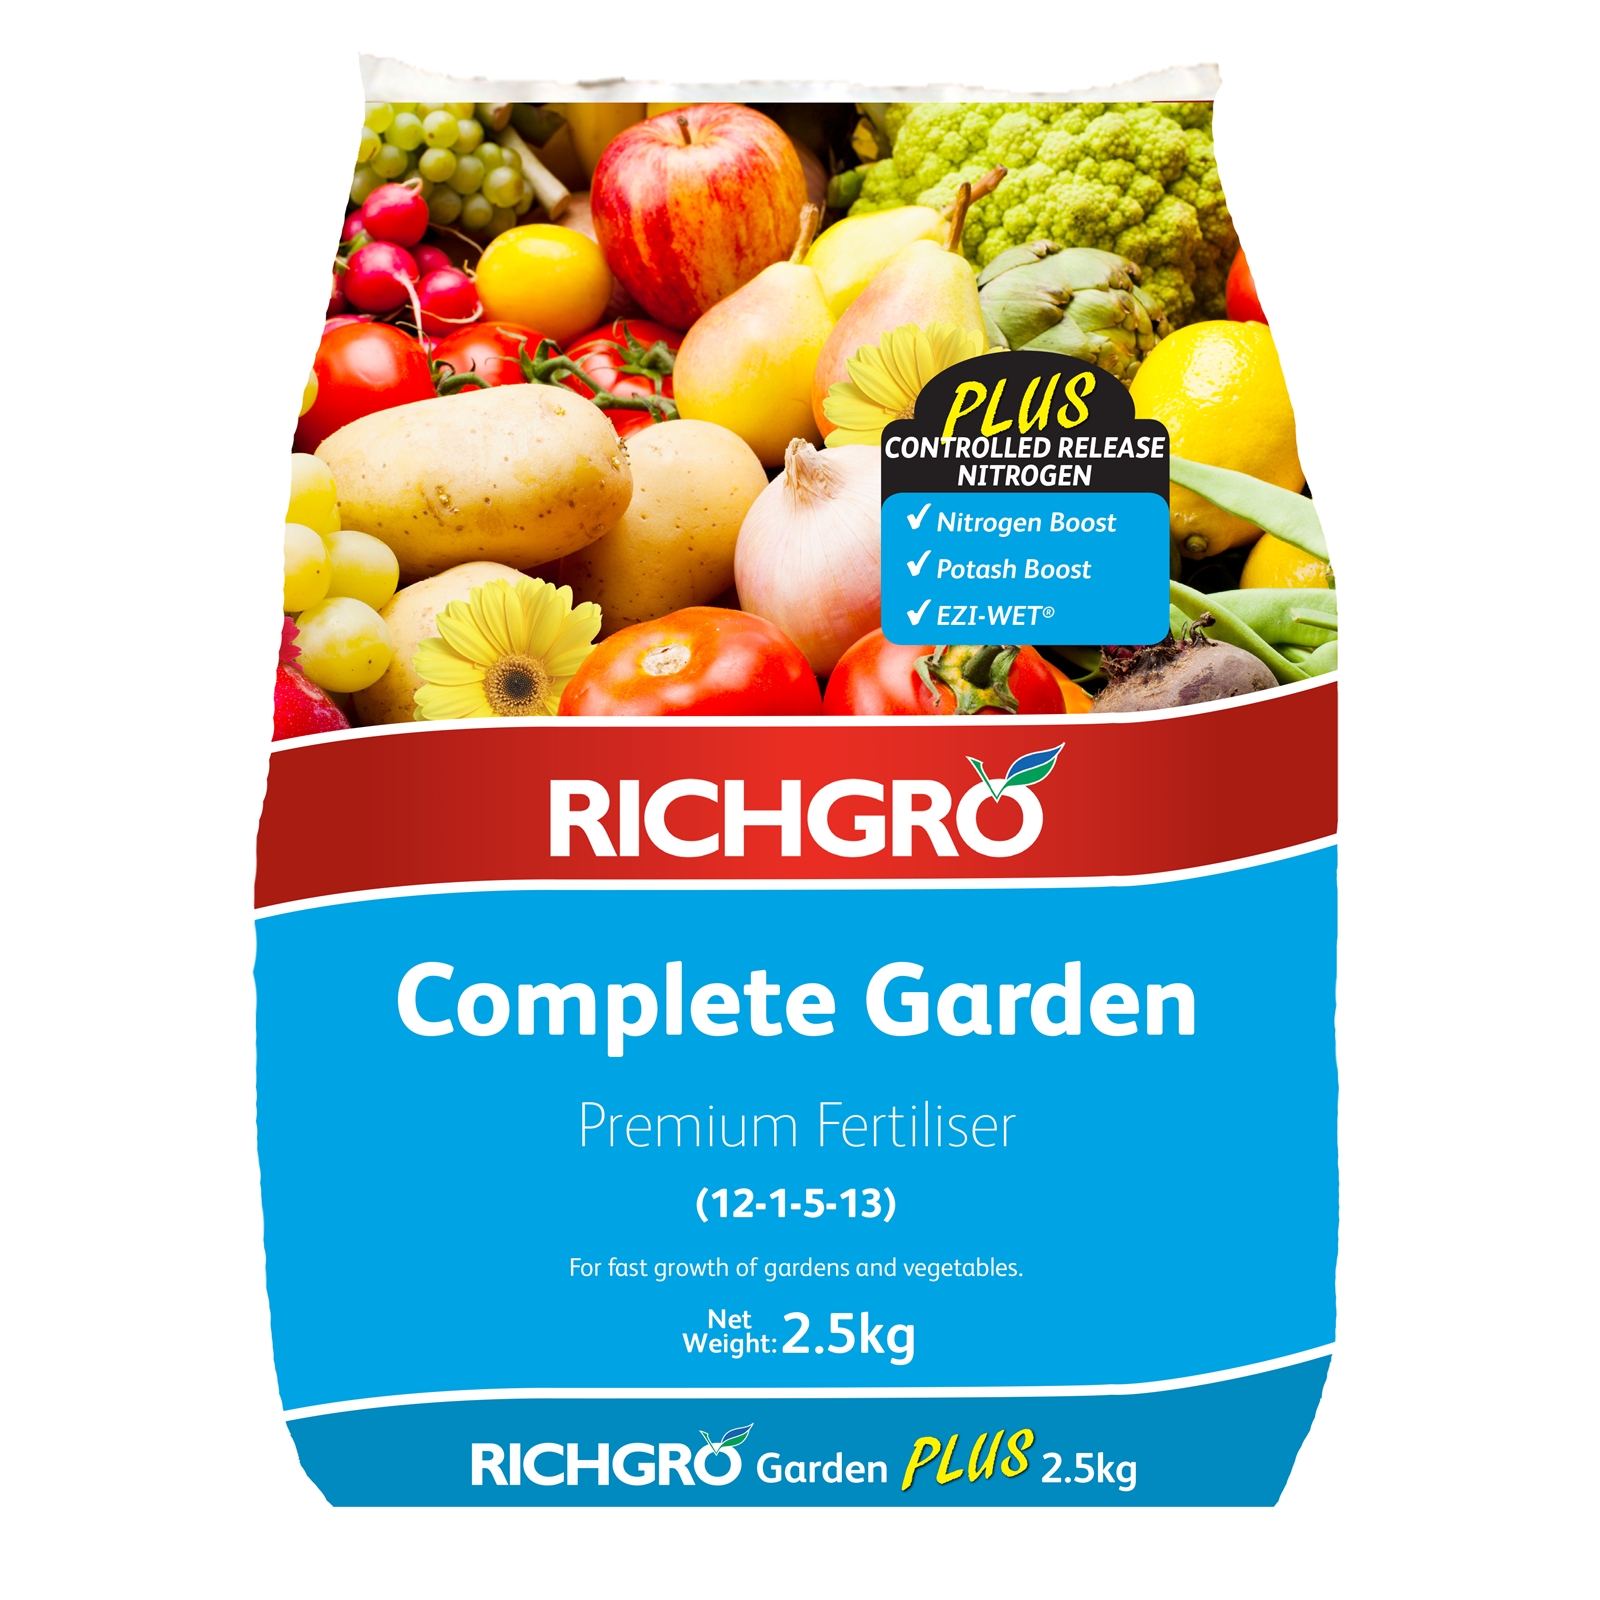 Richgro 2.5kg Garden Plus Complete Garden Premium Fertiliser